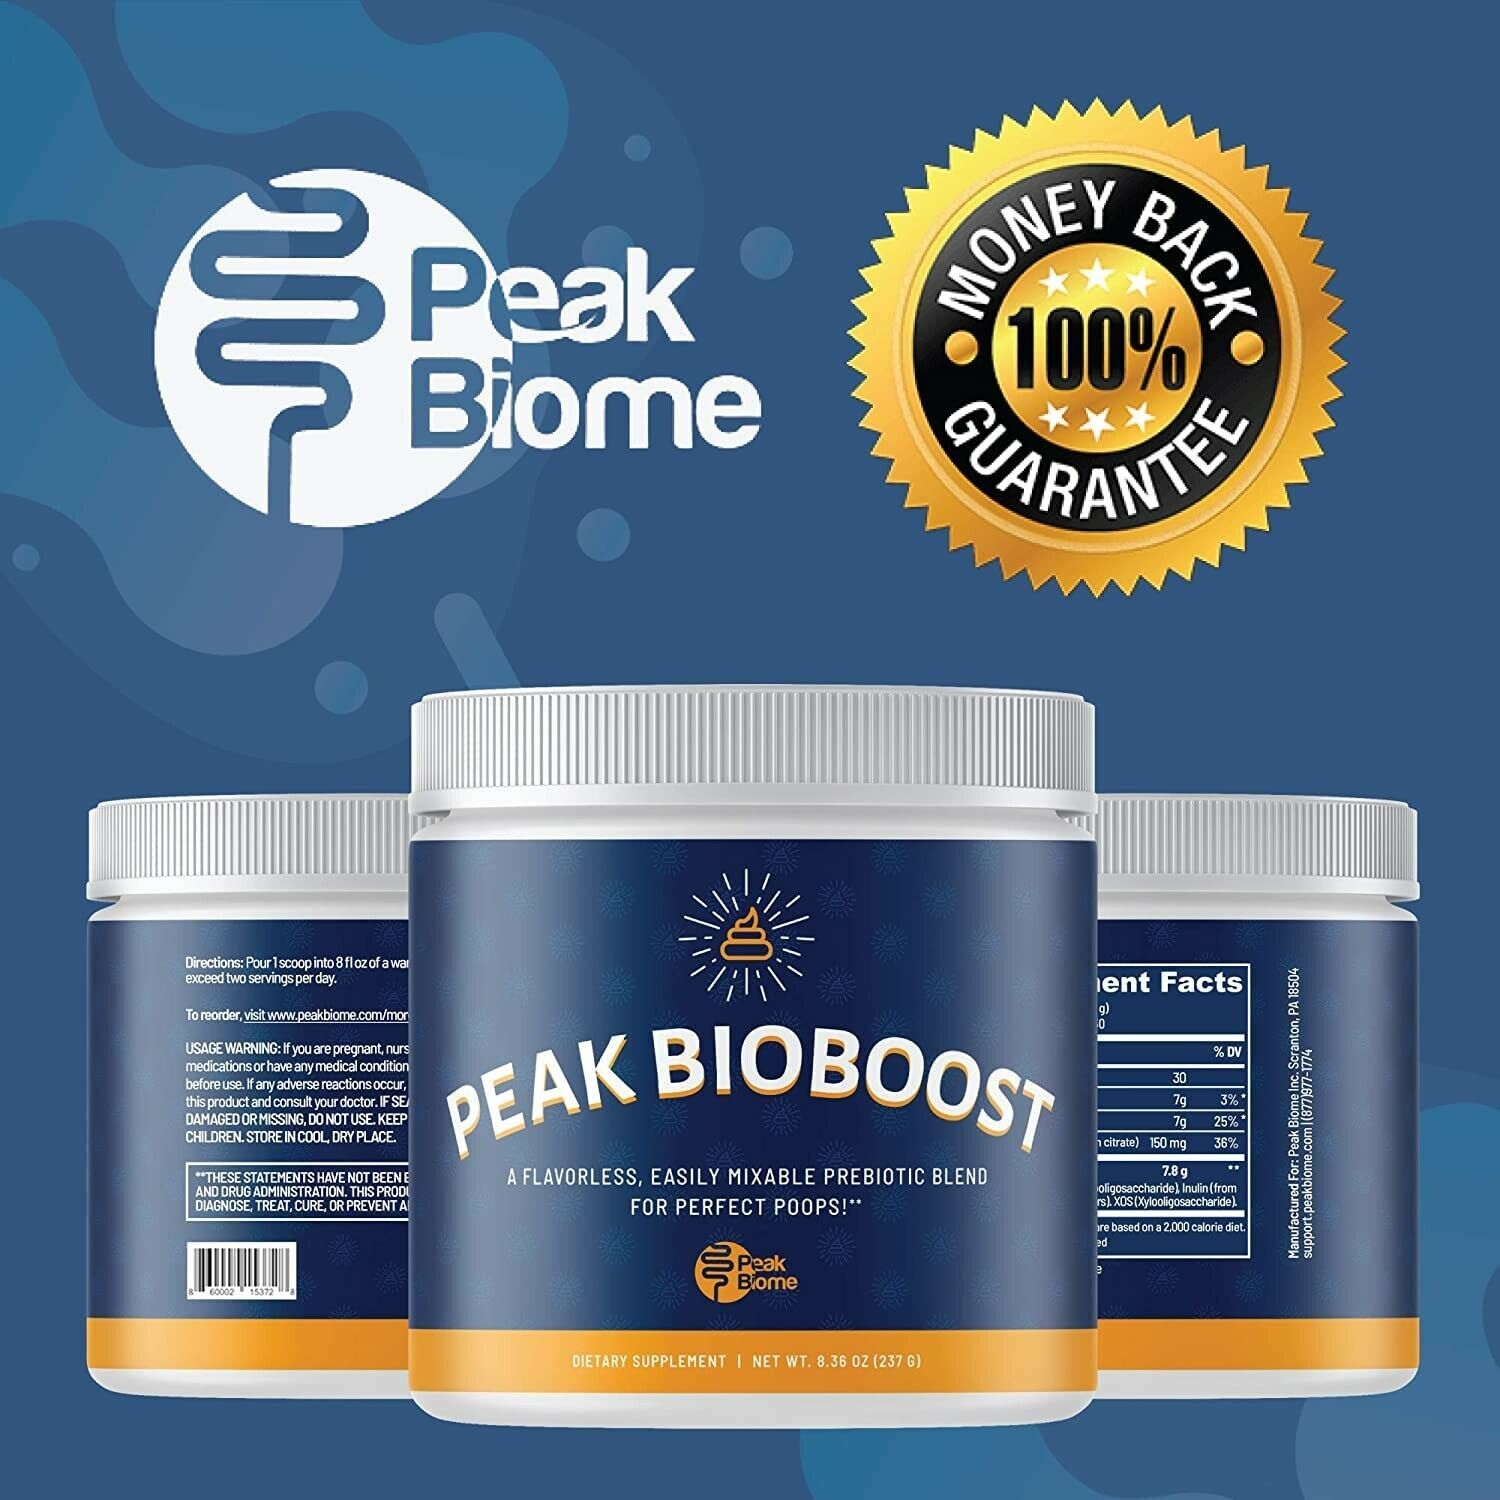 is peak bioboost legit